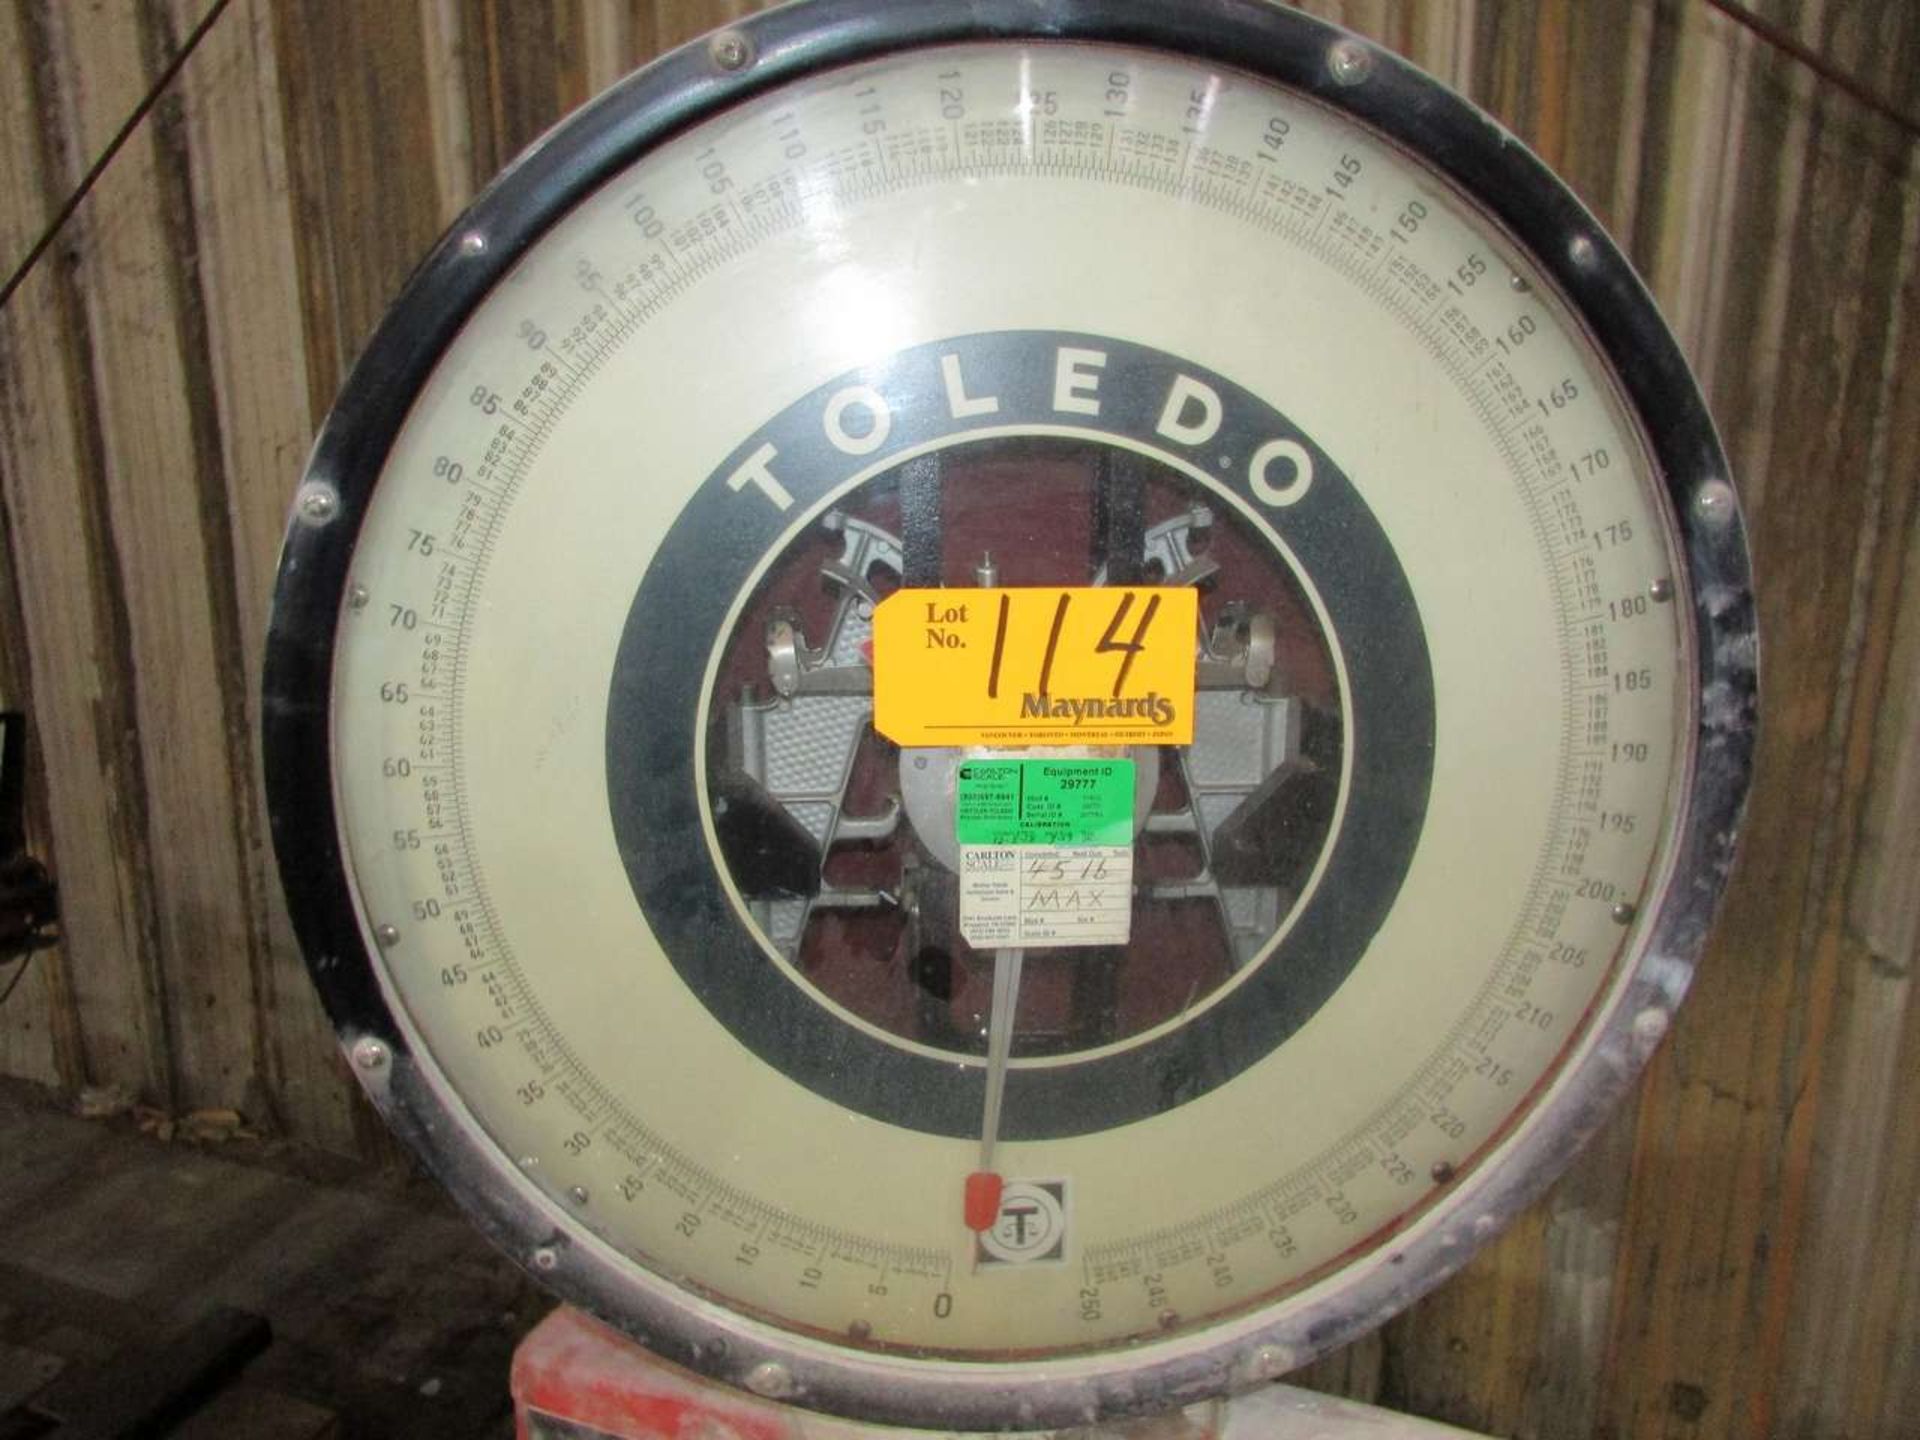 Toledo 2118U 20"x20" Platform Dial Scale - Image 3 of 4